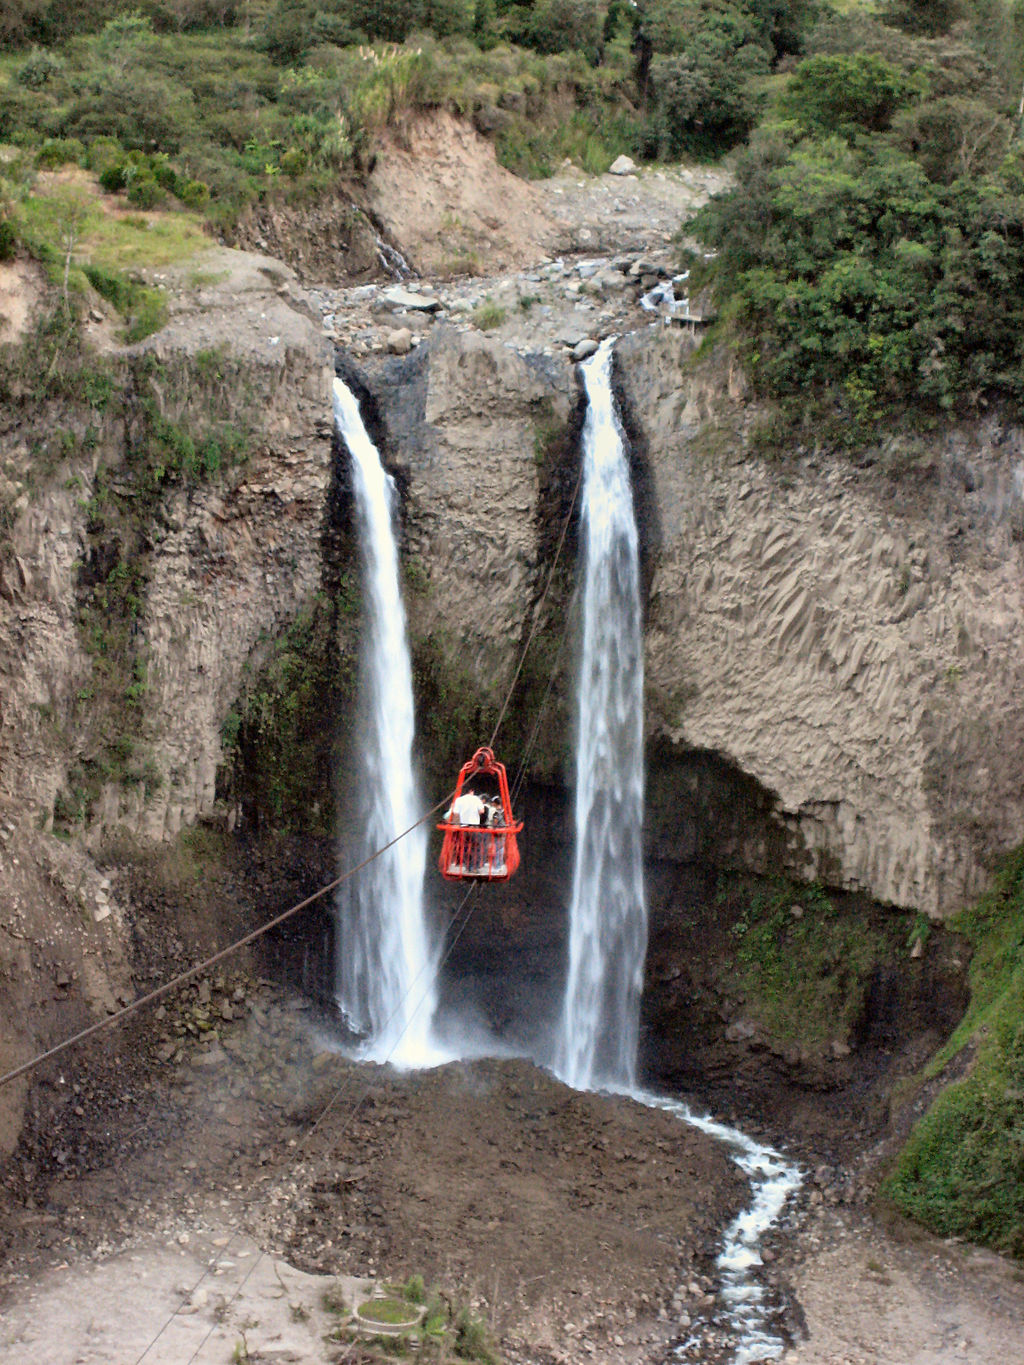 Tarabita crossing the waterfall “The Mantle of the Bride”. Photo credit